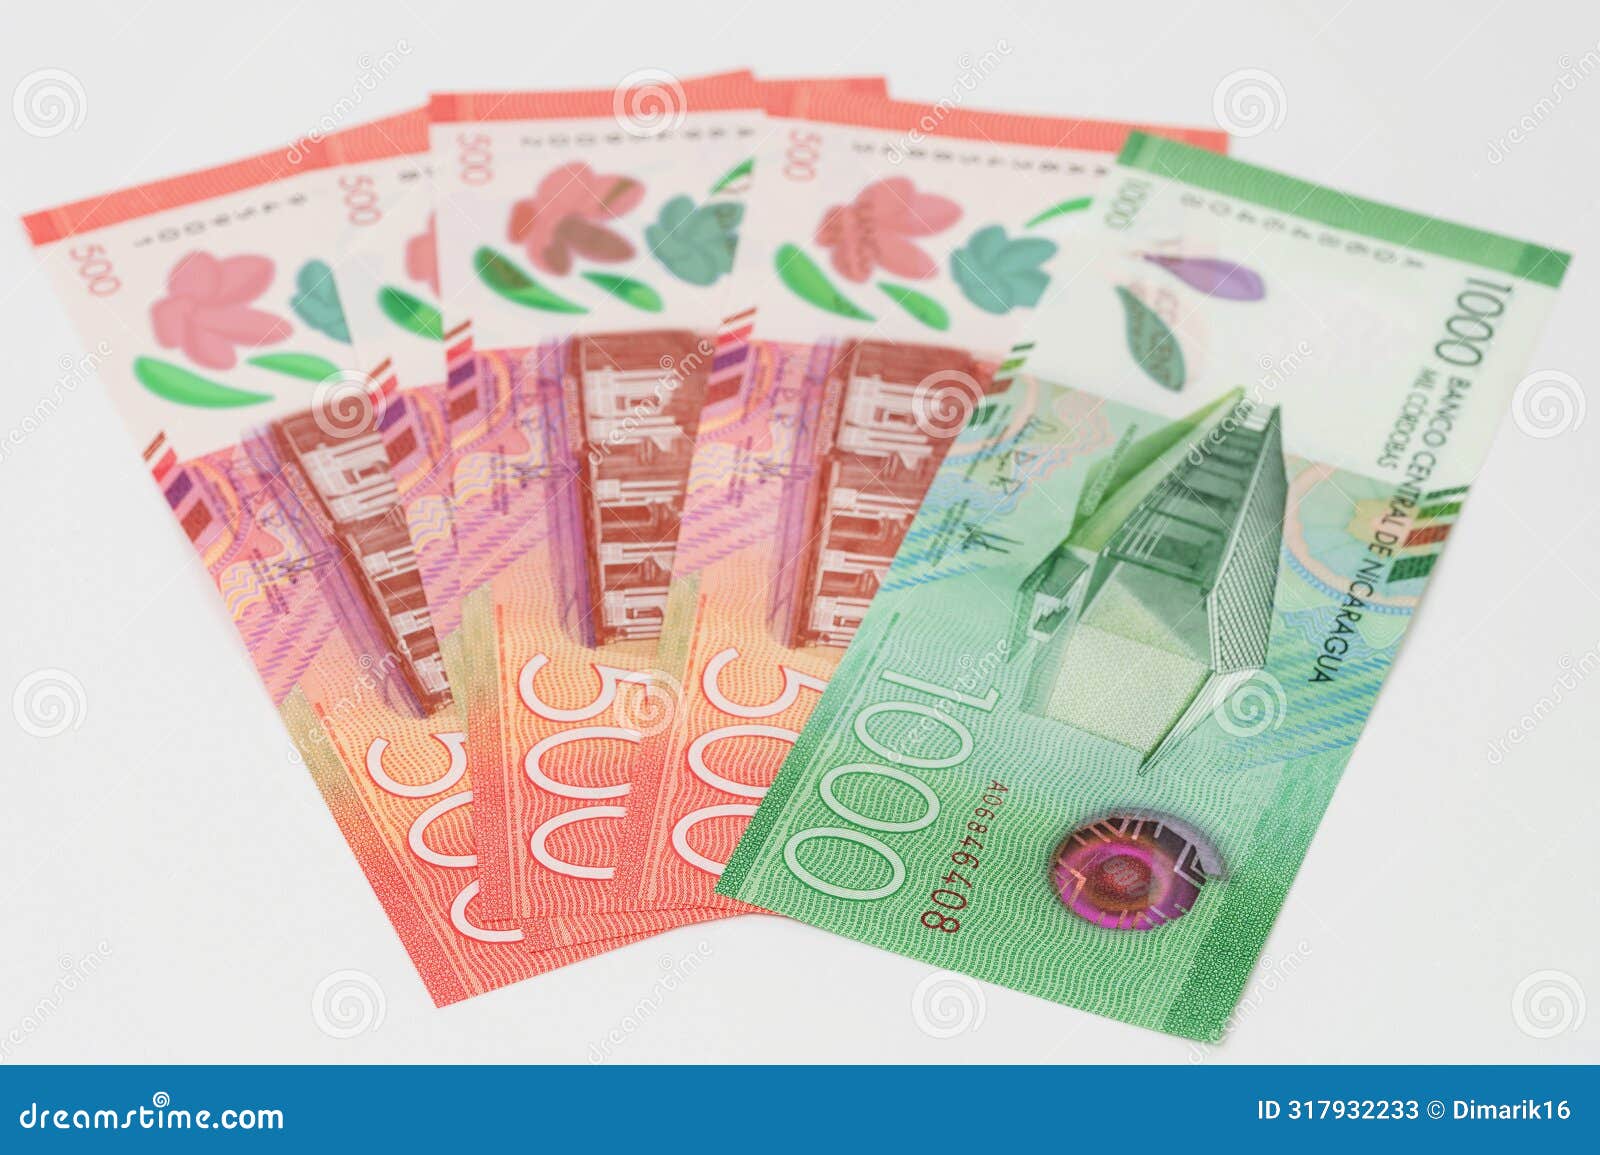 nio nicaraguan currency bills